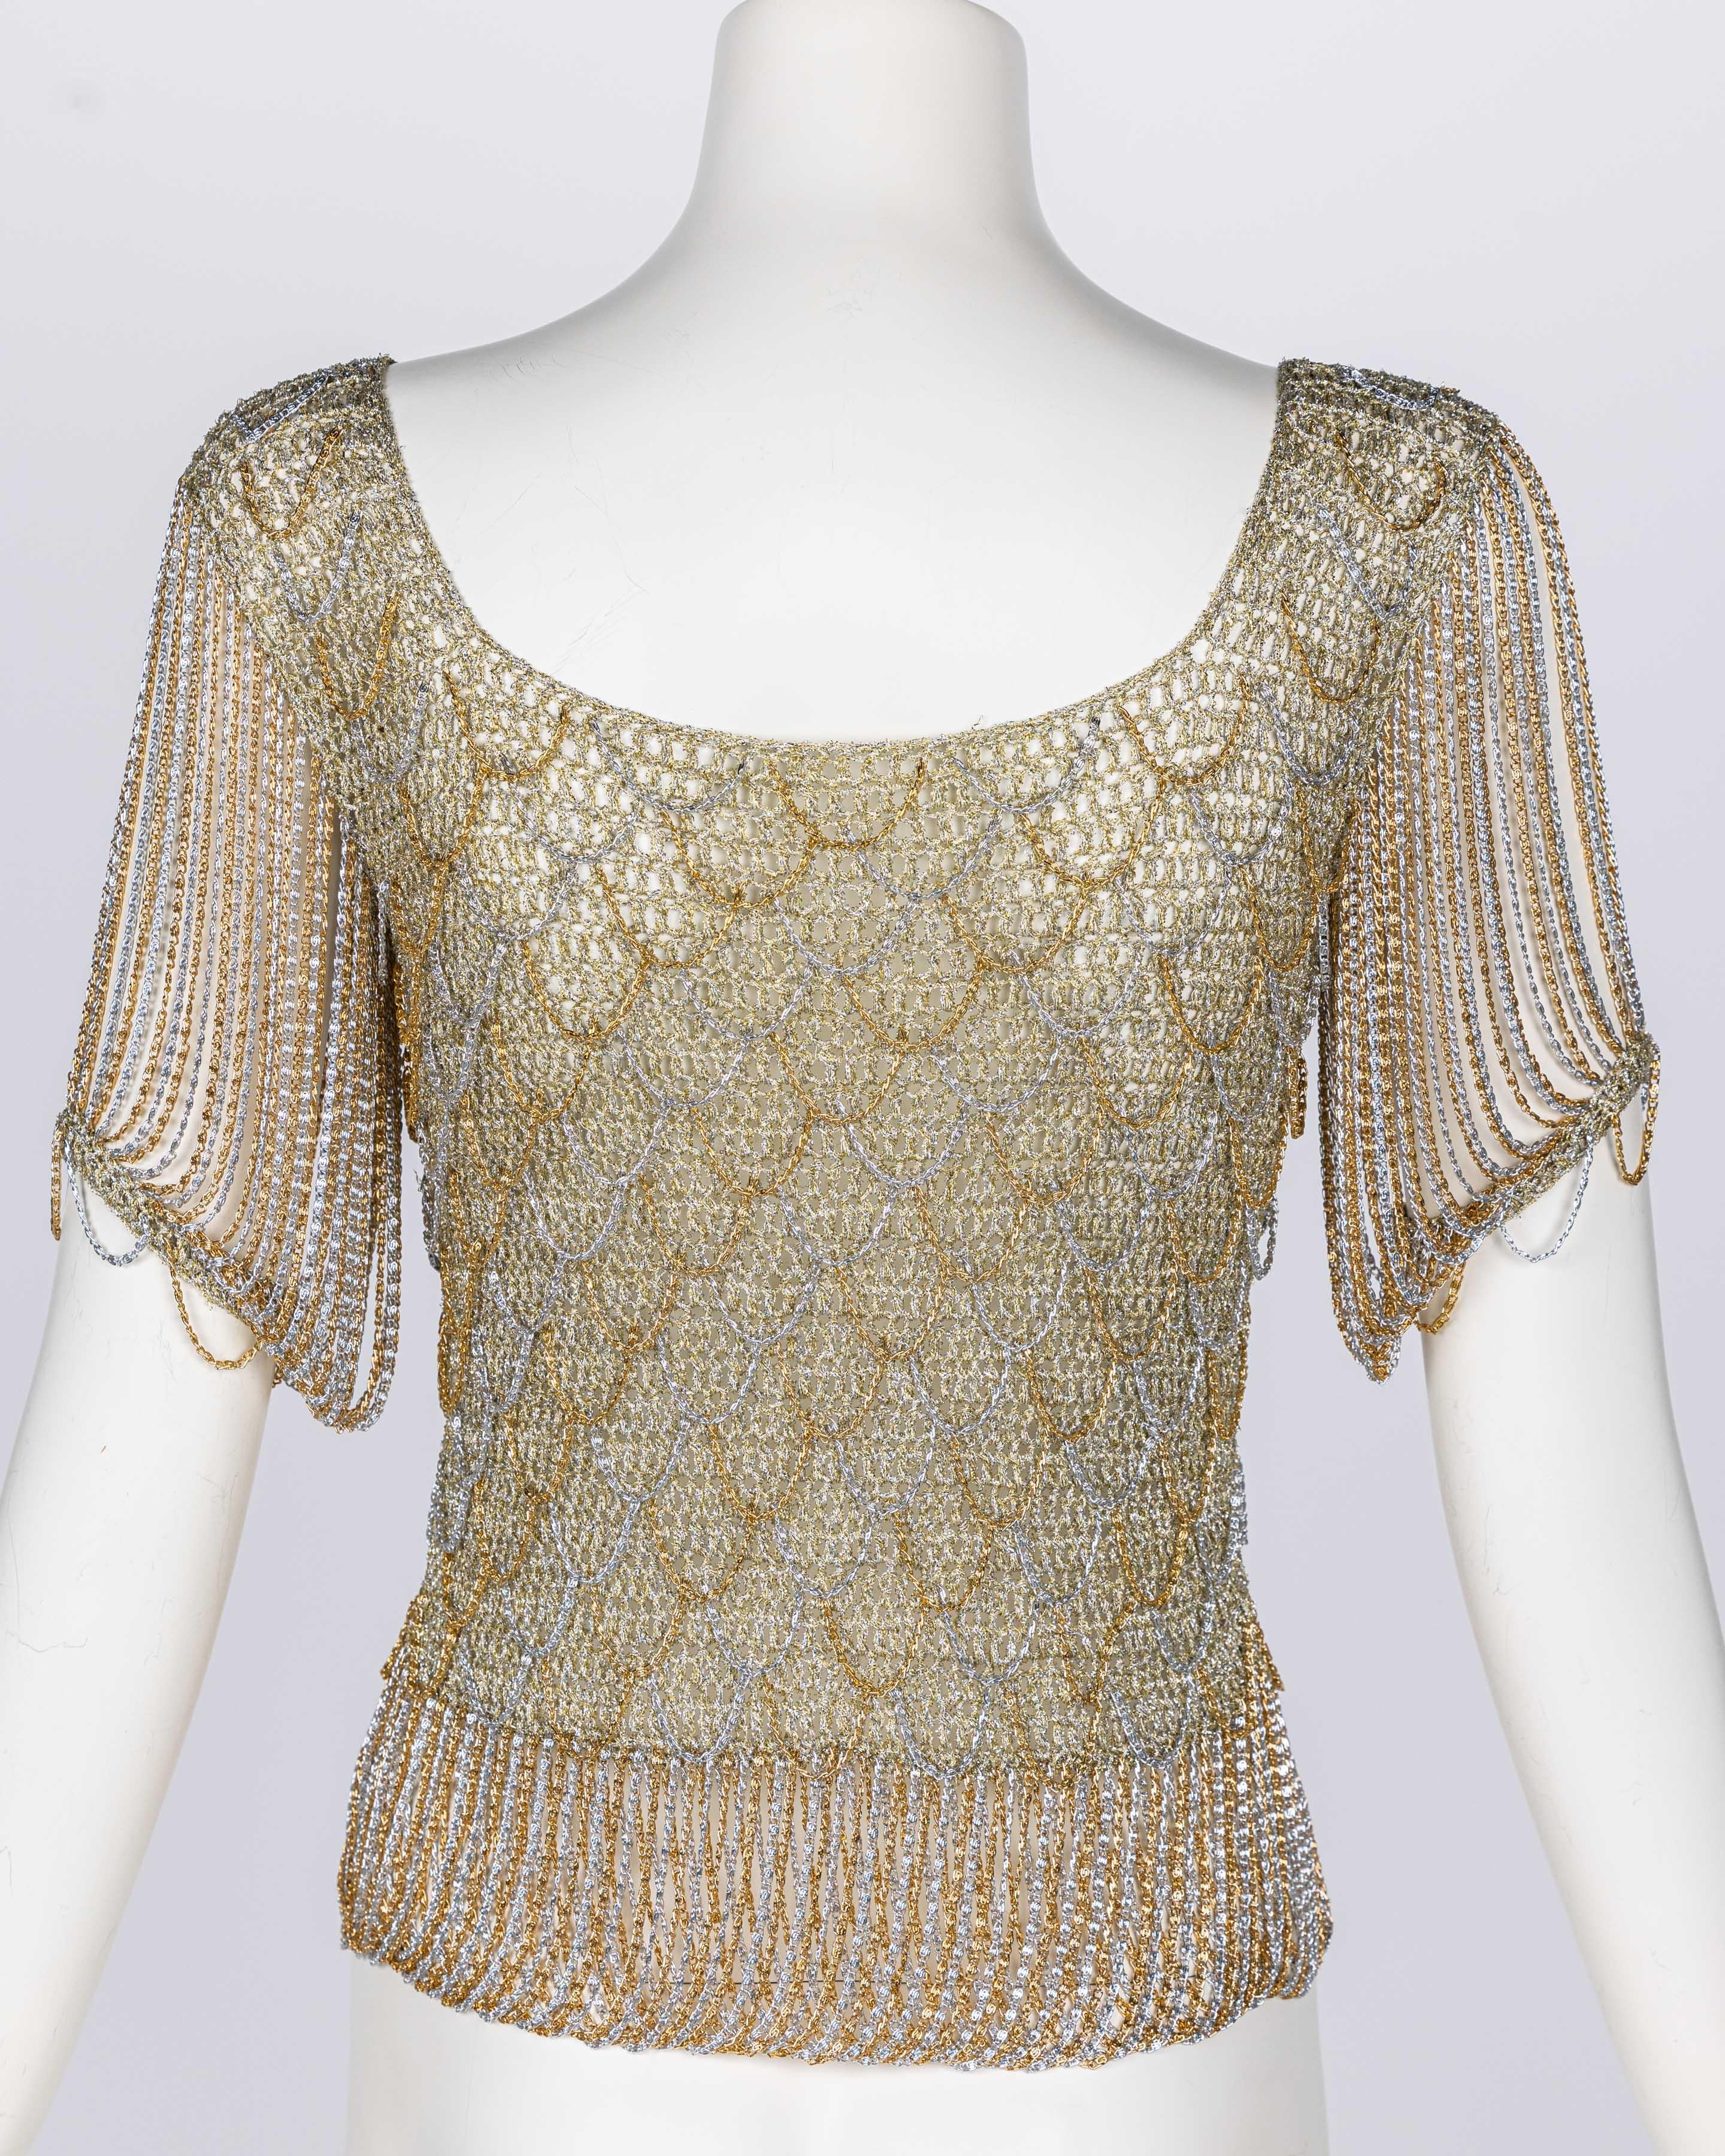 Loris Azzaro Gold Silver Crochet chain Top, 1970s For Sale 1